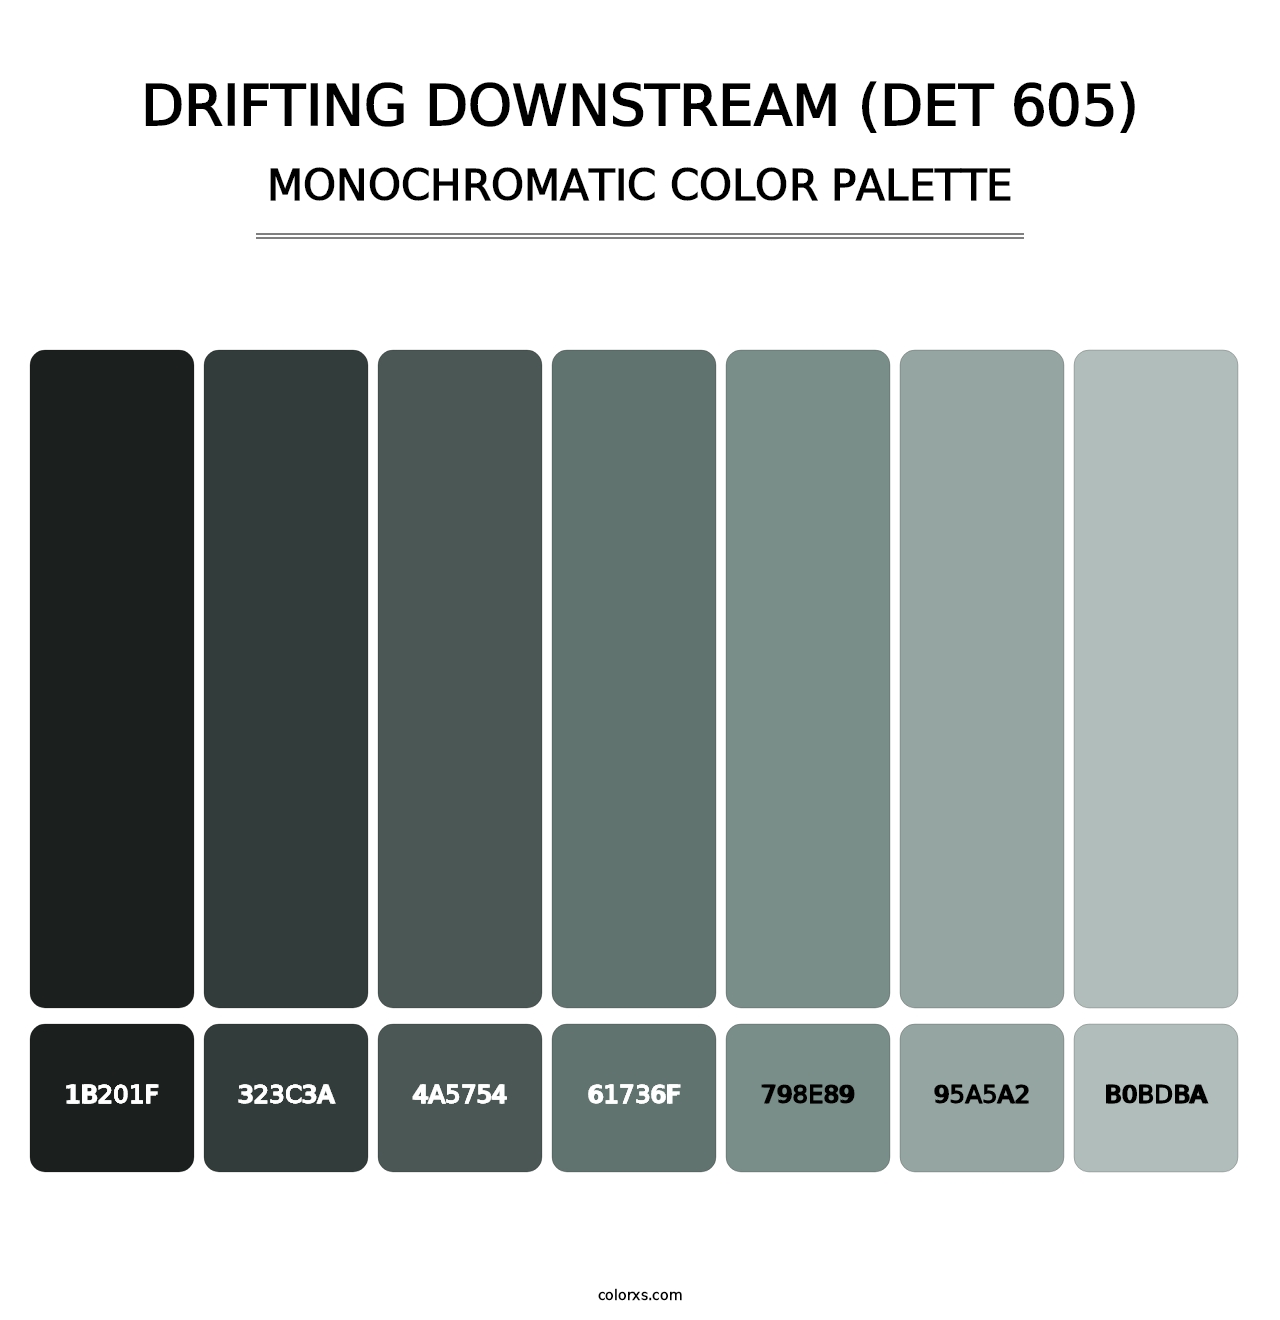 Drifting Downstream (DET 605) - Monochromatic Color Palette